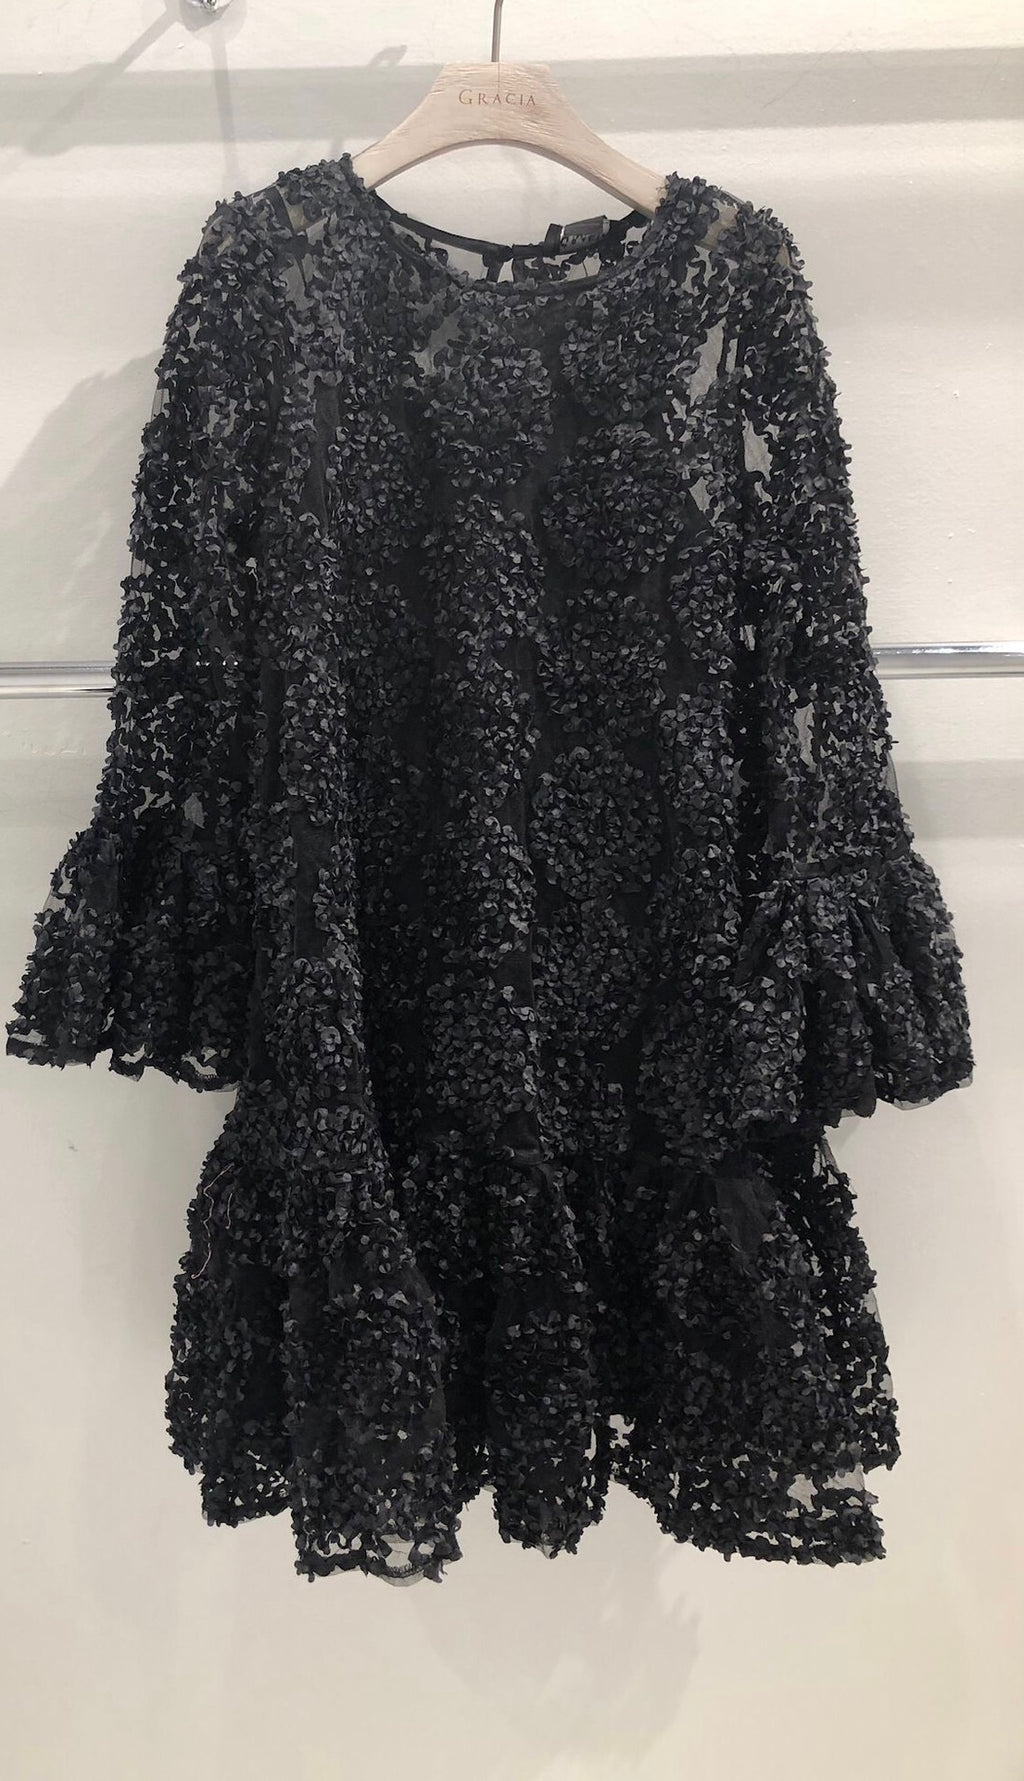 Gracia Black Dress